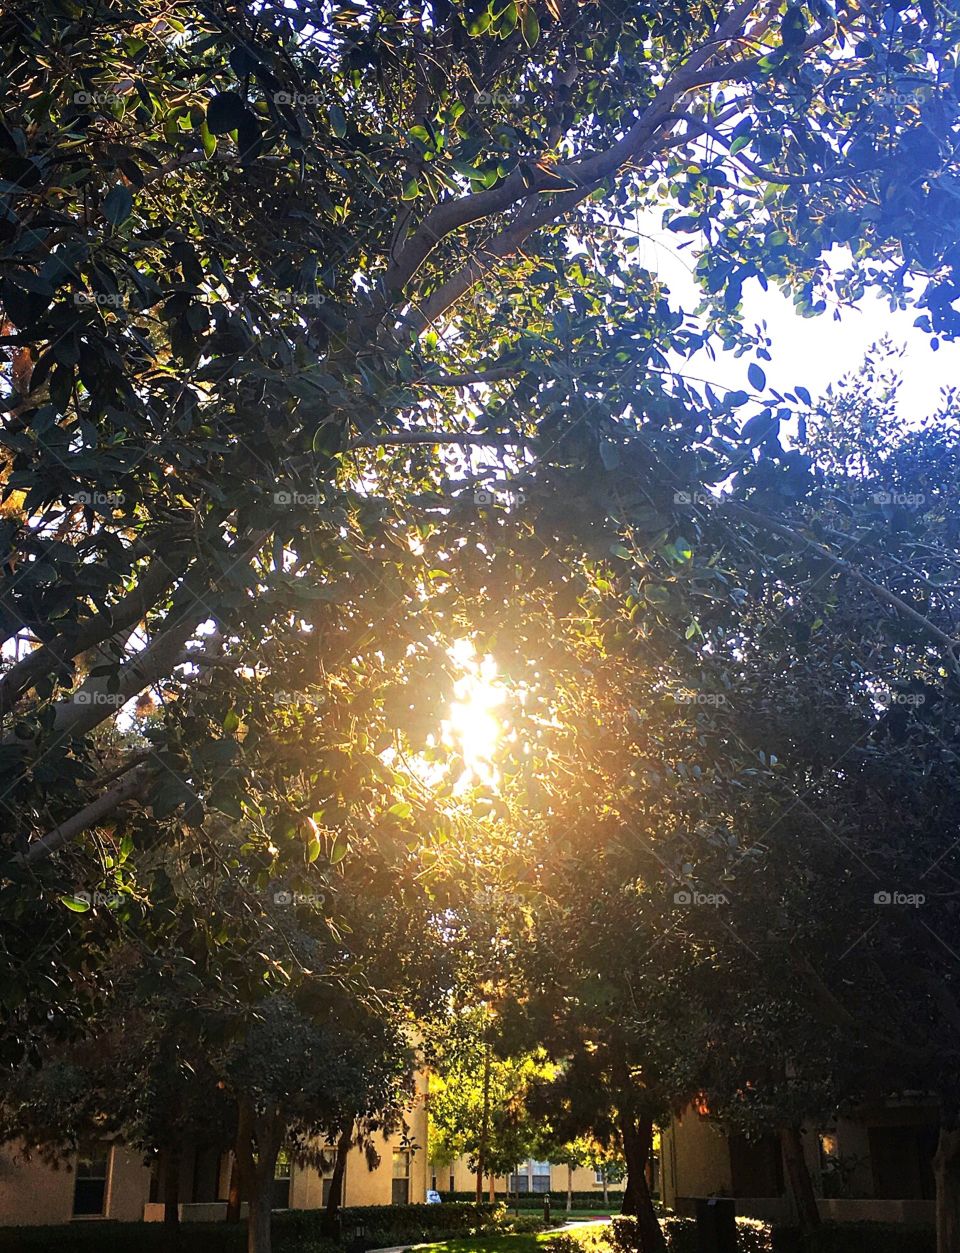 Capture of the sun peeking through the trees in an urban environment 